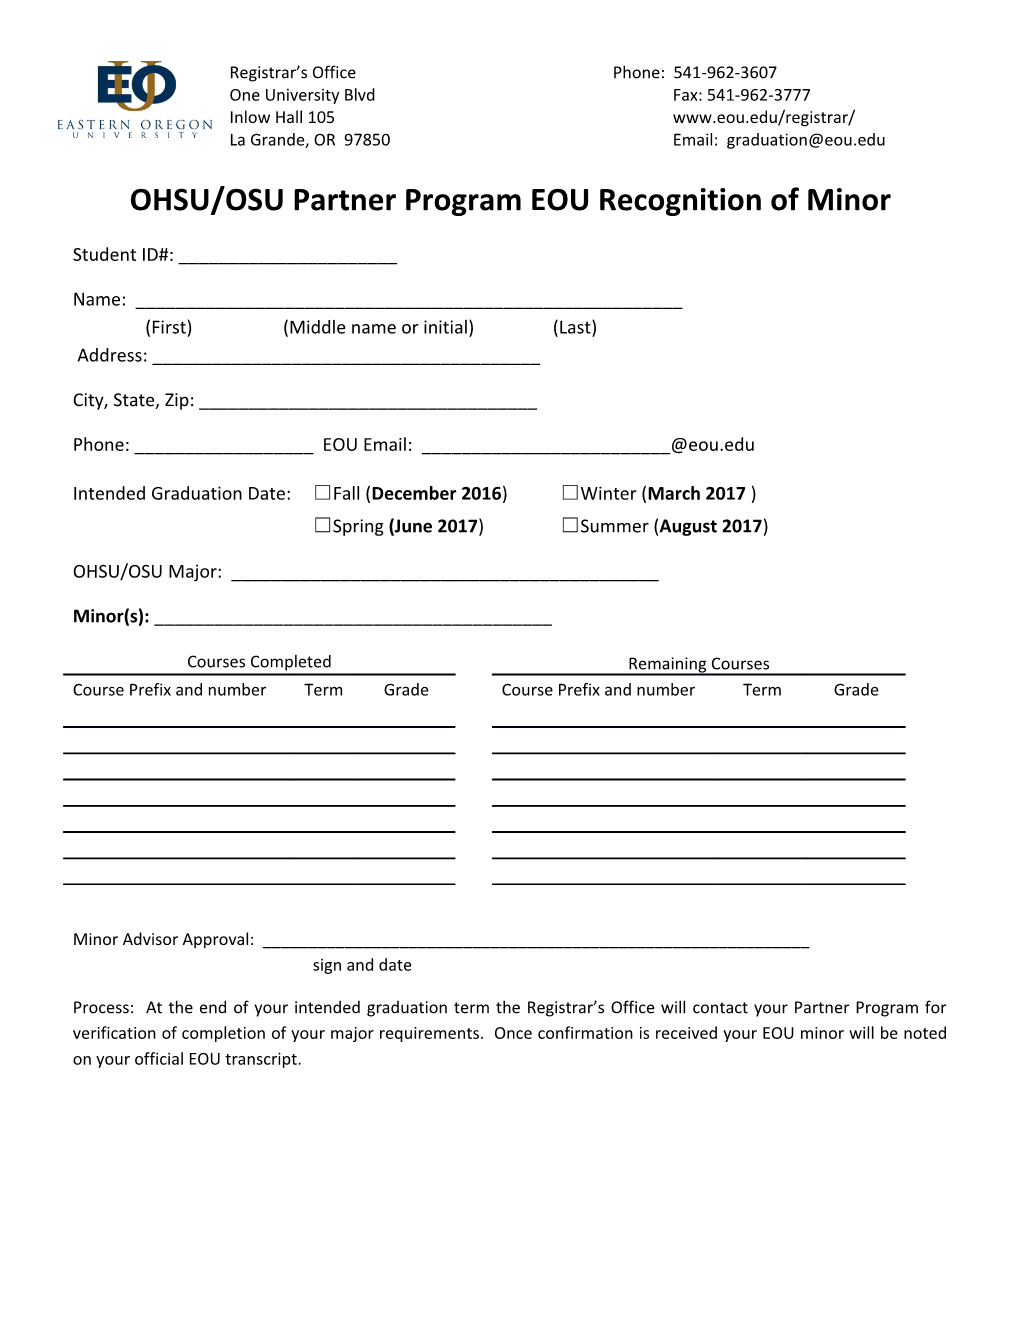 OHSU/OSU Partner Program EOU Recognition of Minor